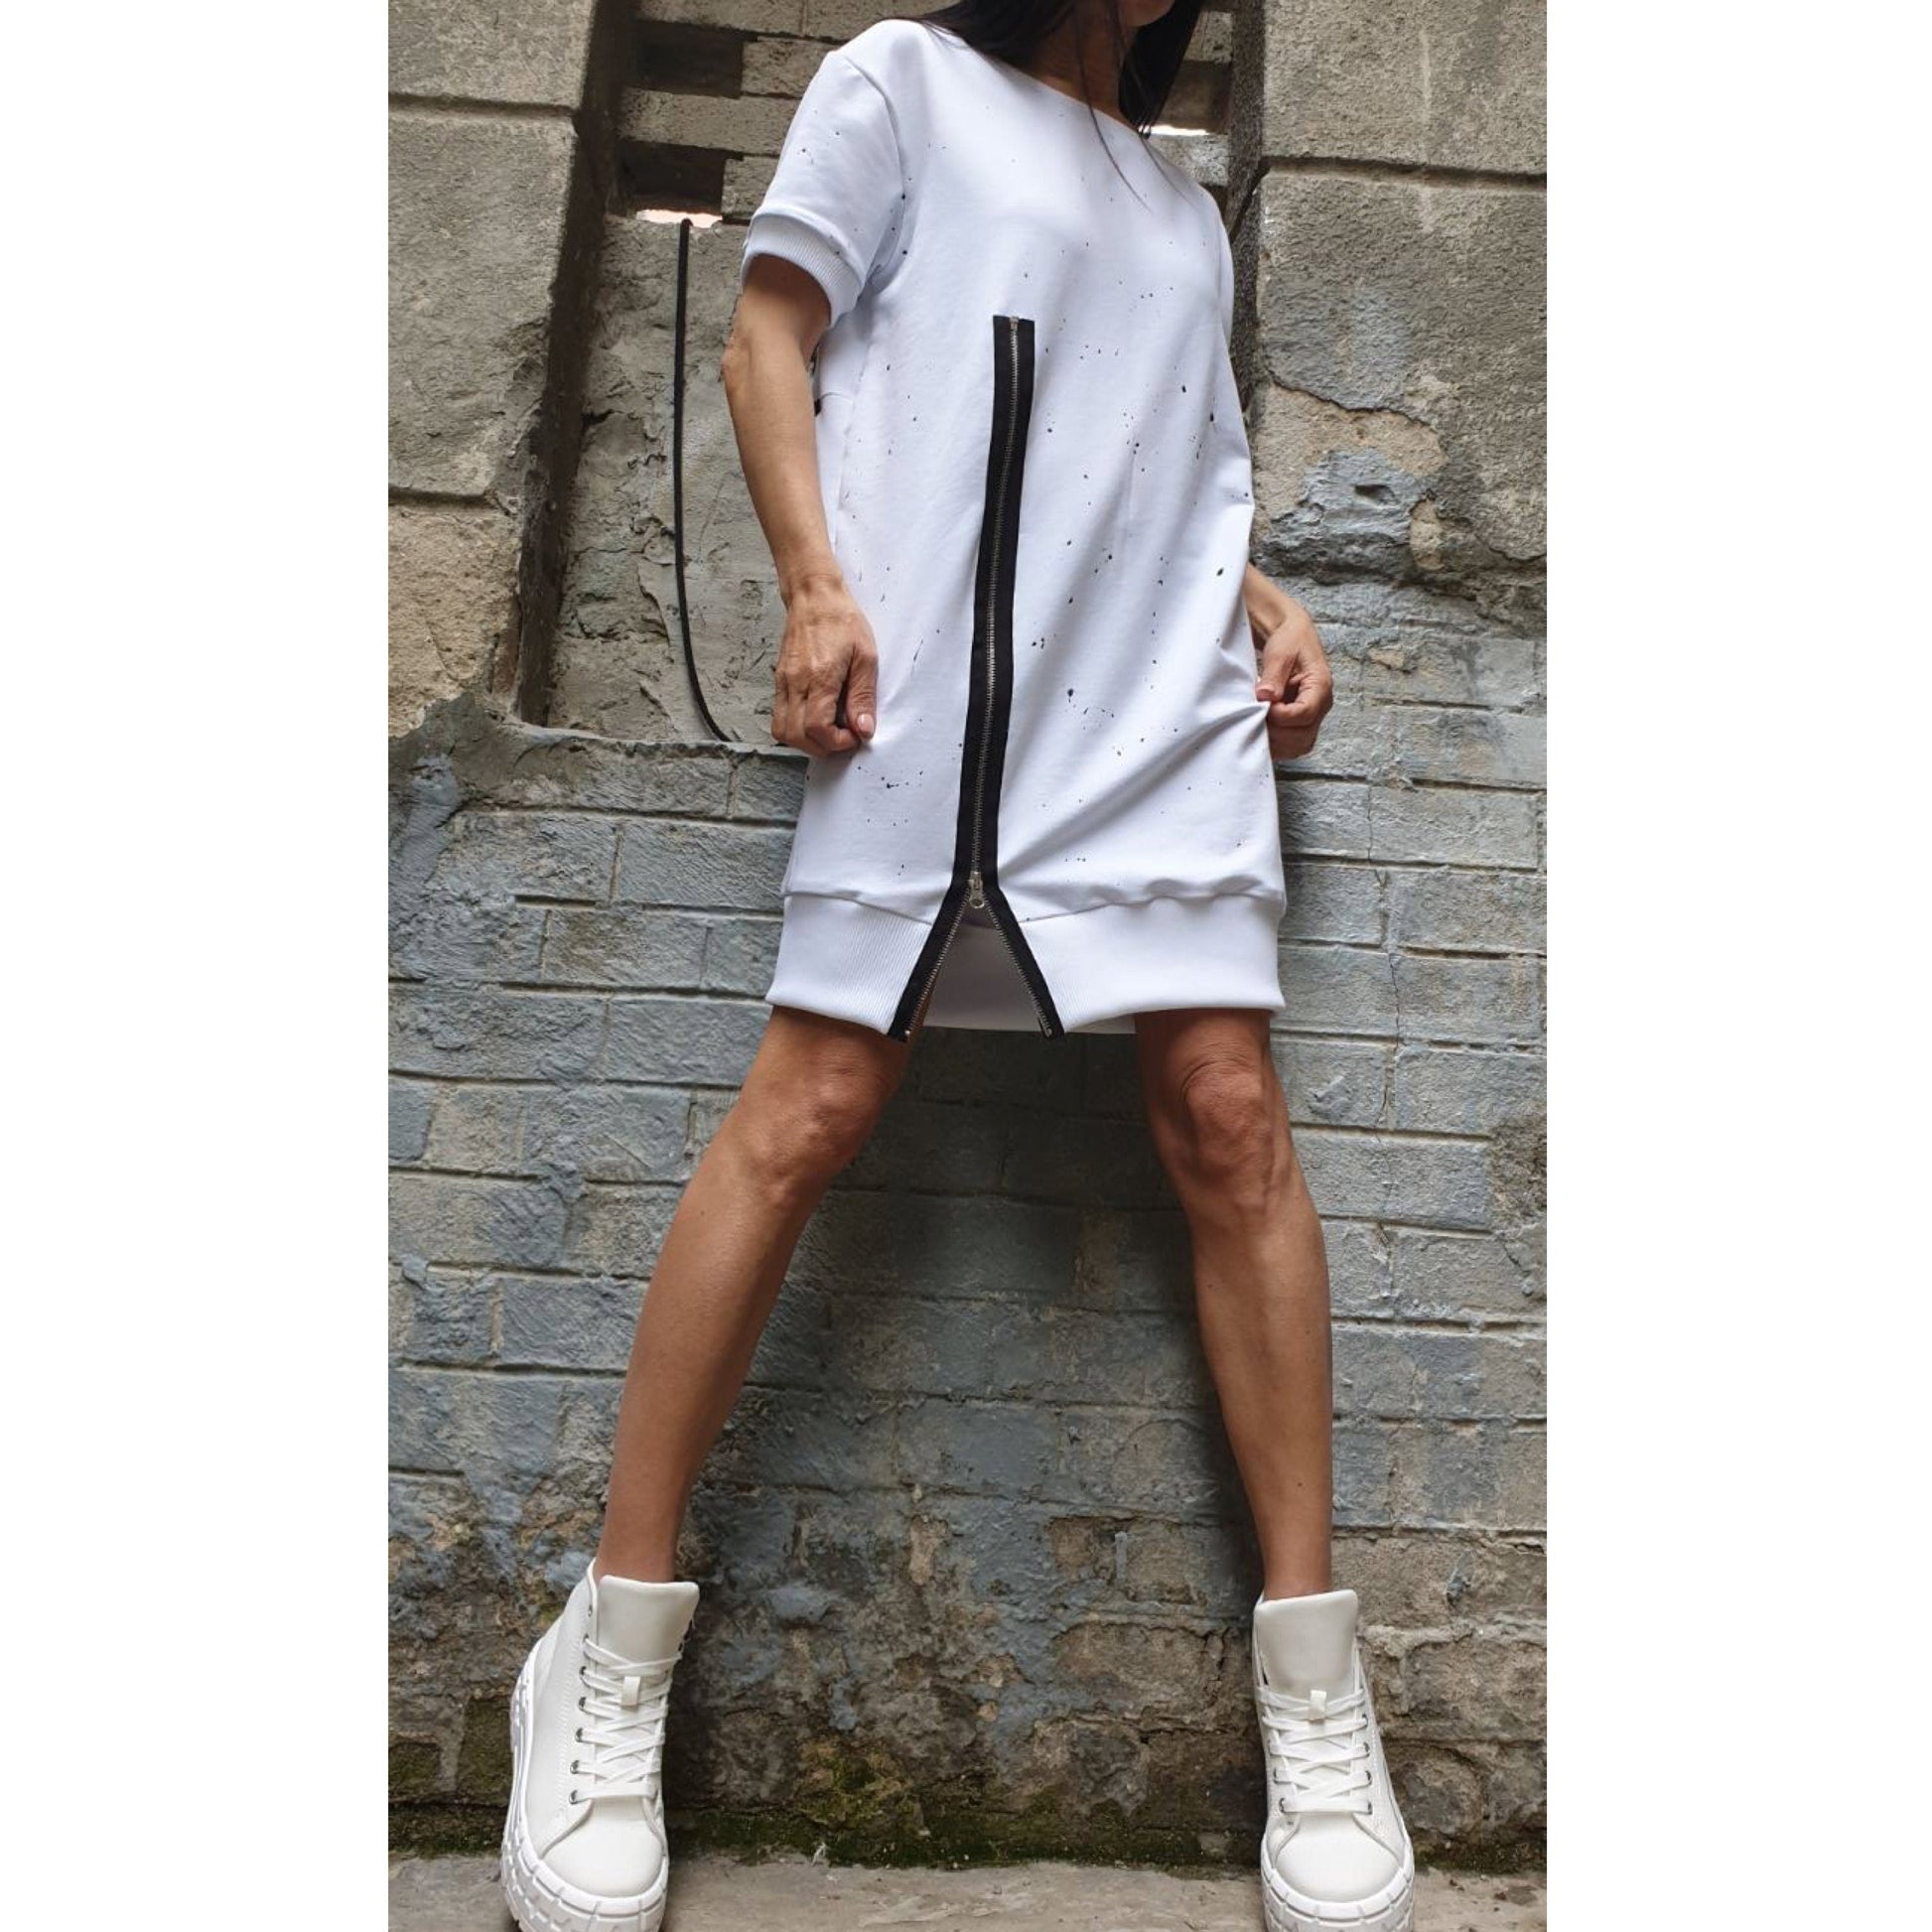 White Zipper Dress - Handmade clothing from AngelBySilvia - Top Designer Brands 